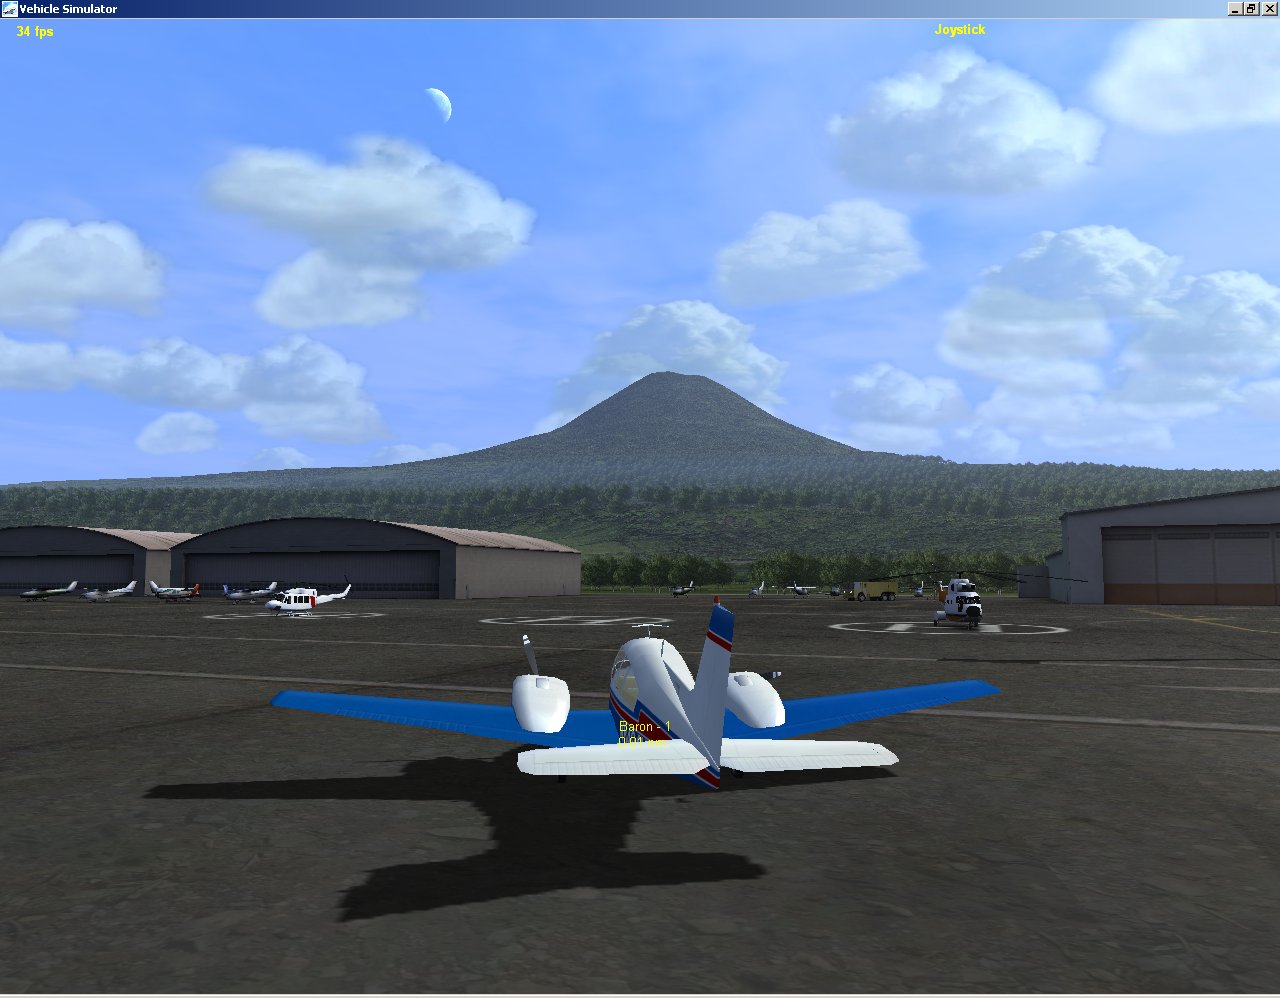 Vehicle Simulator - South West Europe Scenery Featured Screenshot #1